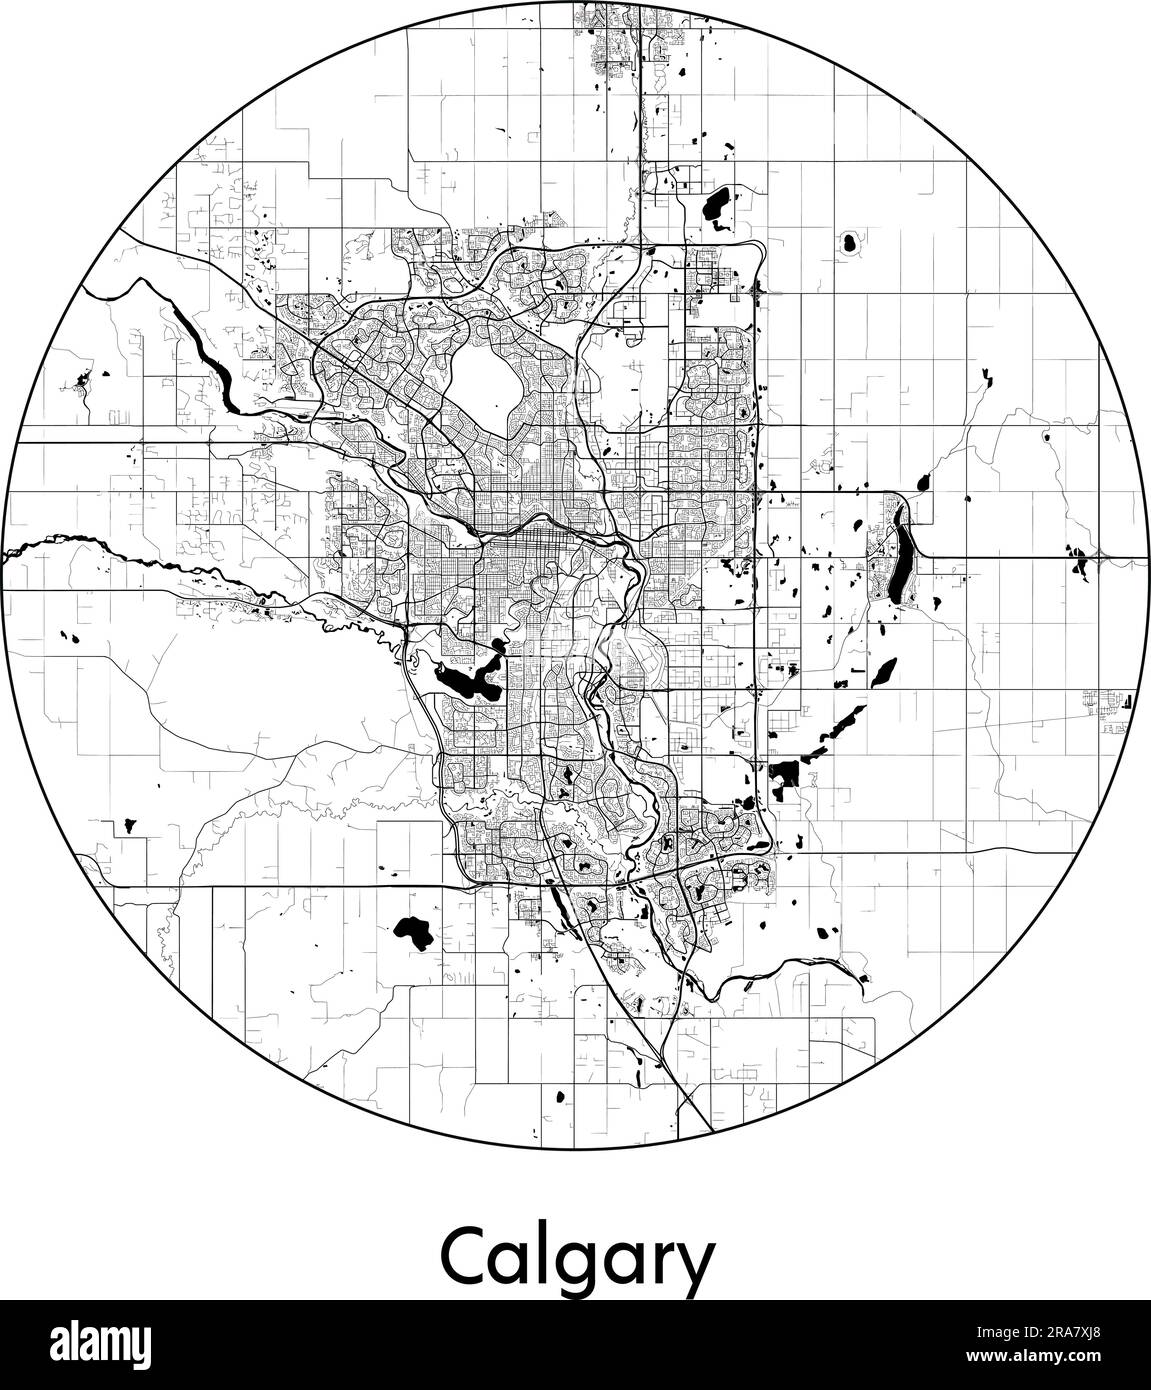 Stadtplan Calgary Kanada Nordamerika Vektordarstellung schwarz weiß Stock Vektor